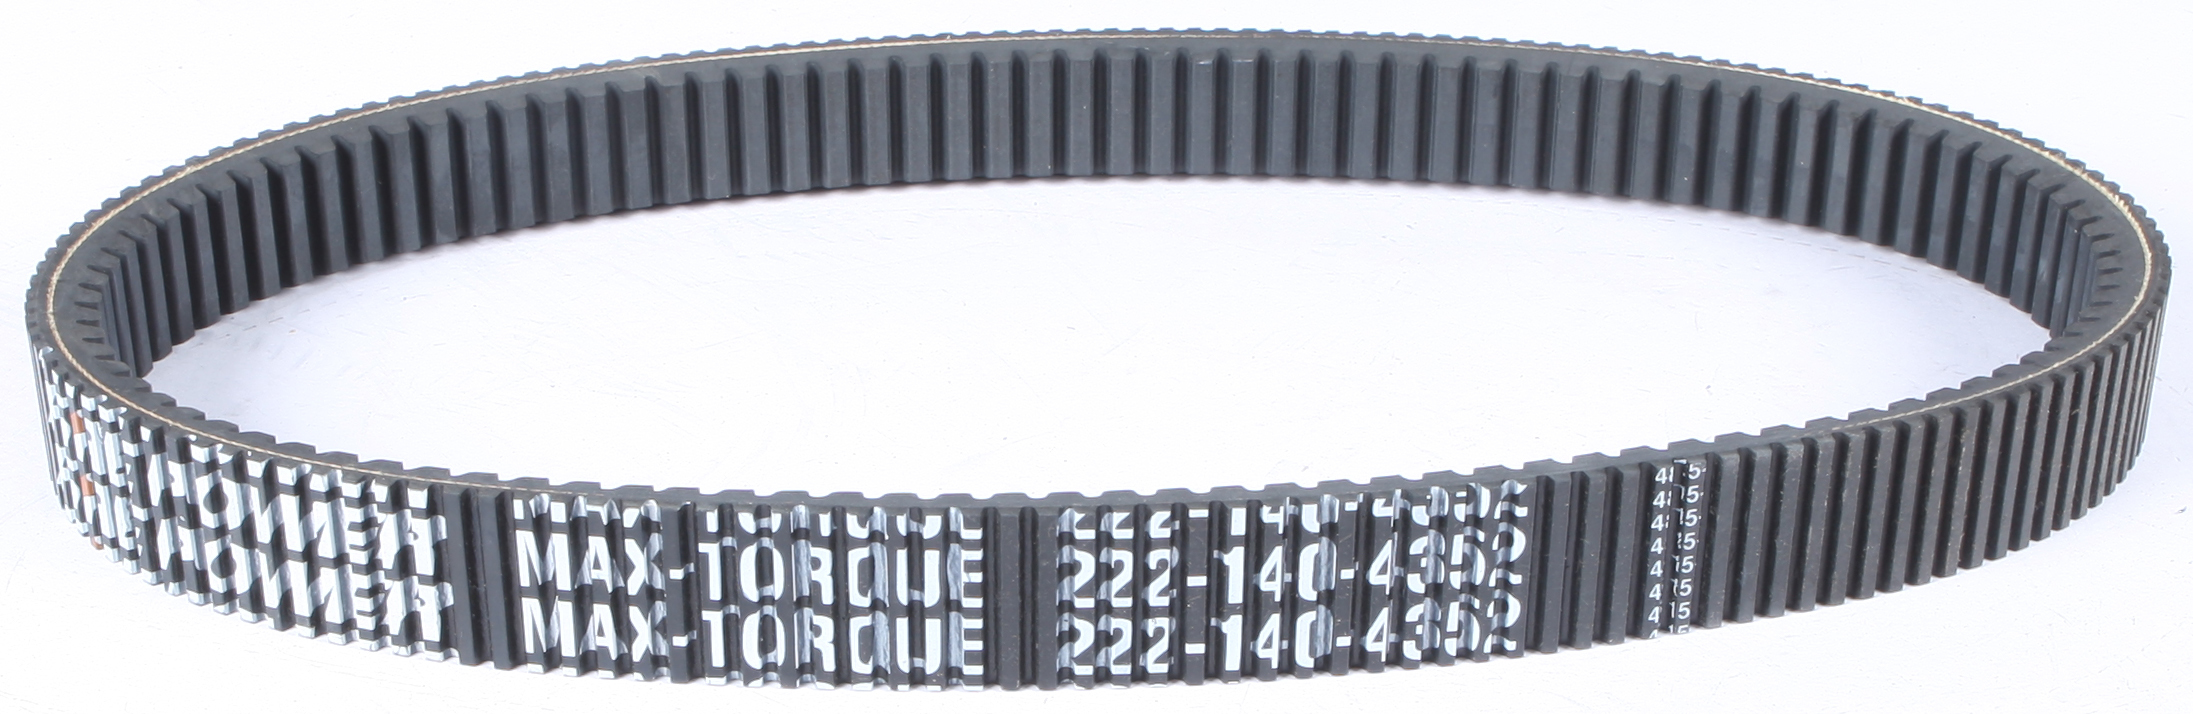 Max-Torque Snowmobile Belt 43 13/16" X 1 7/16" - Click Image to Close